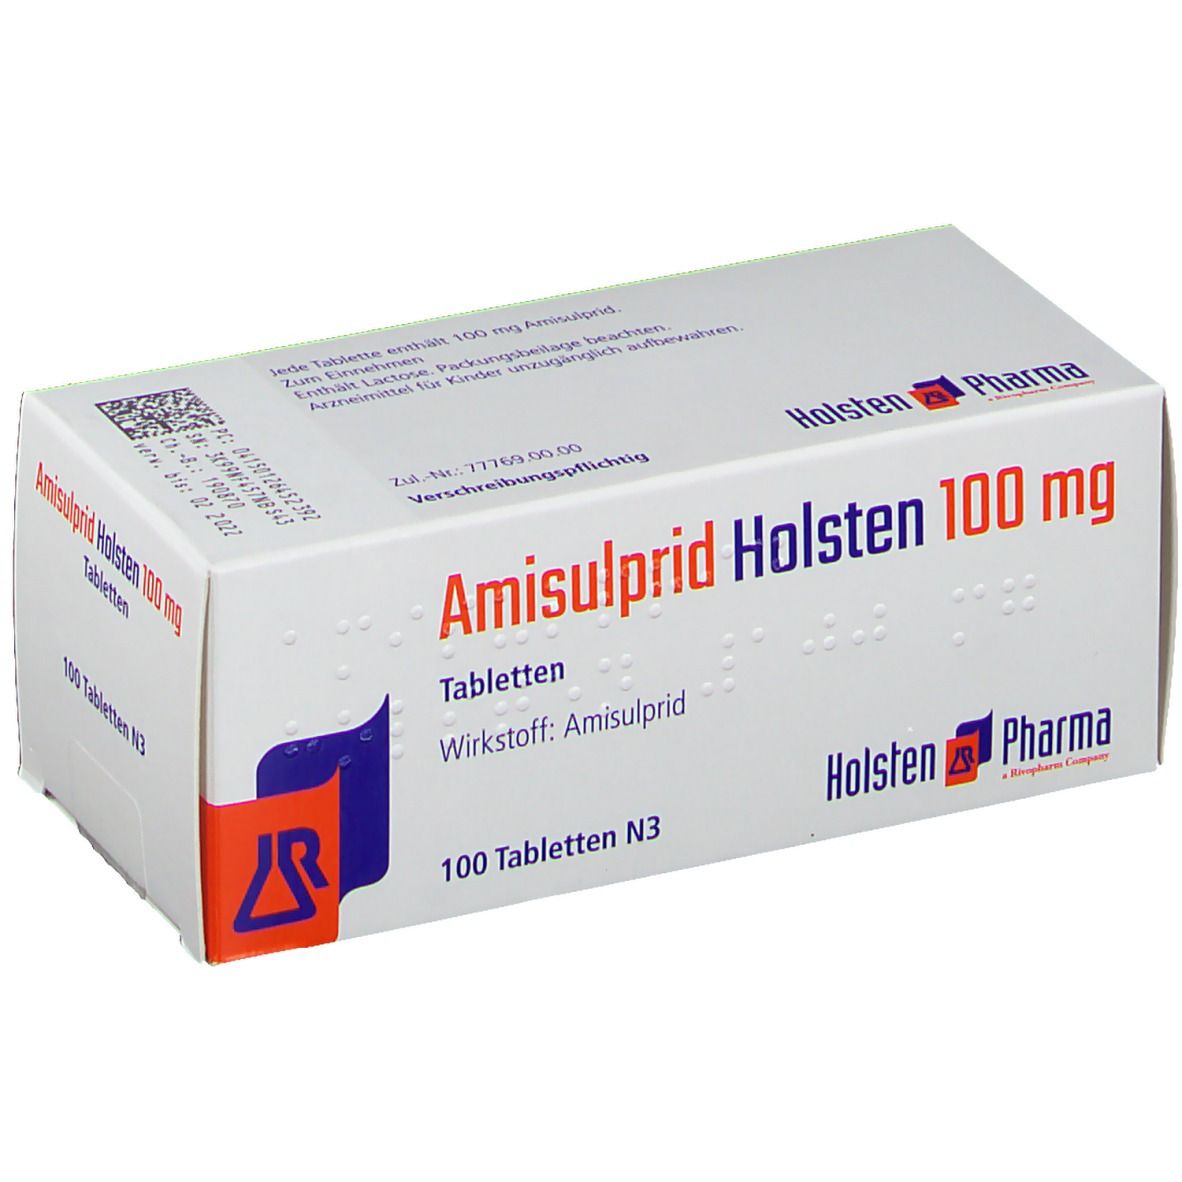 Amisulprid Holsten 100 mg